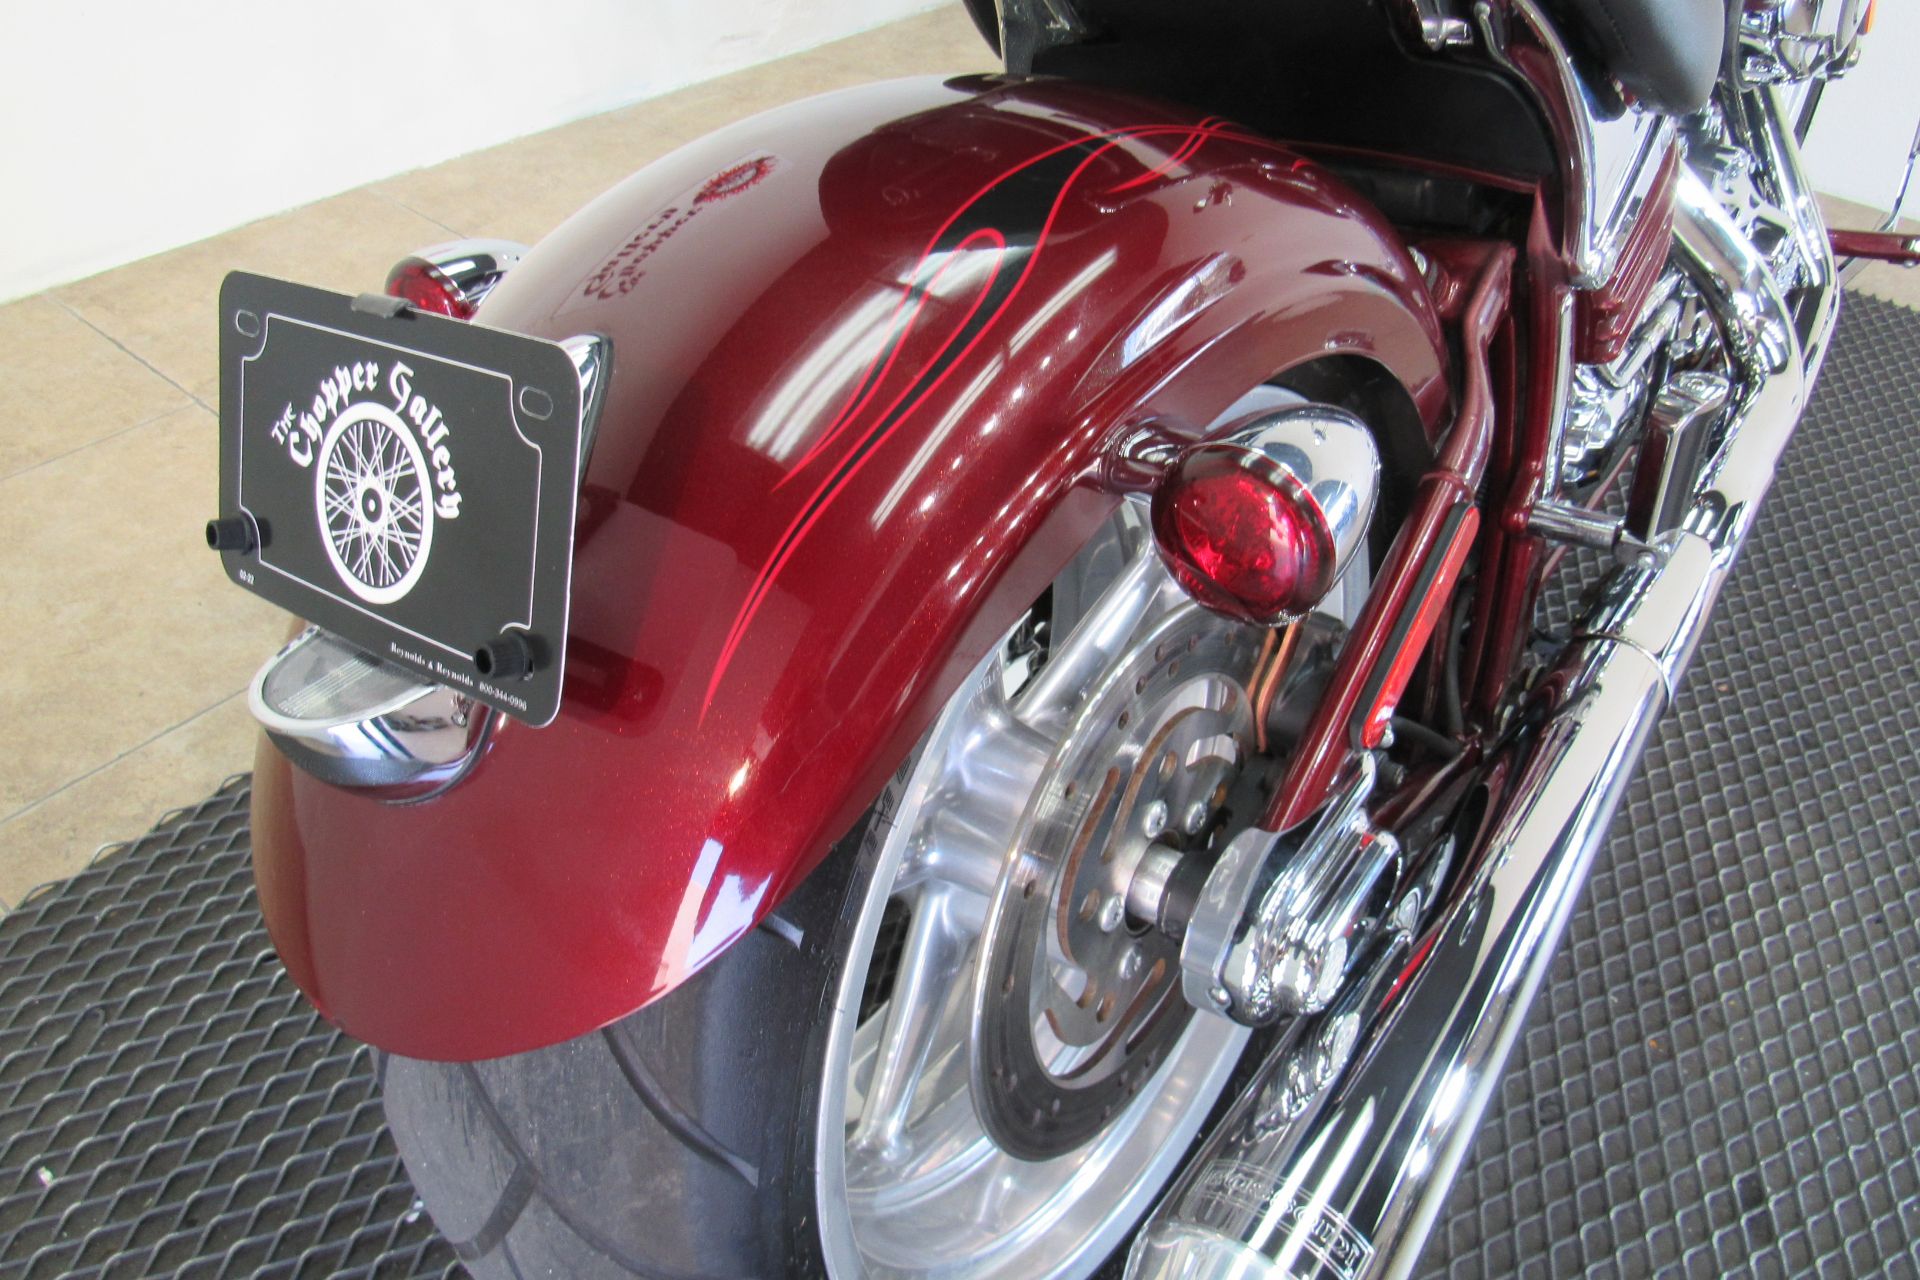 2009 Harley-Davidson Softail® Rocker™ in Temecula, California - Photo 28